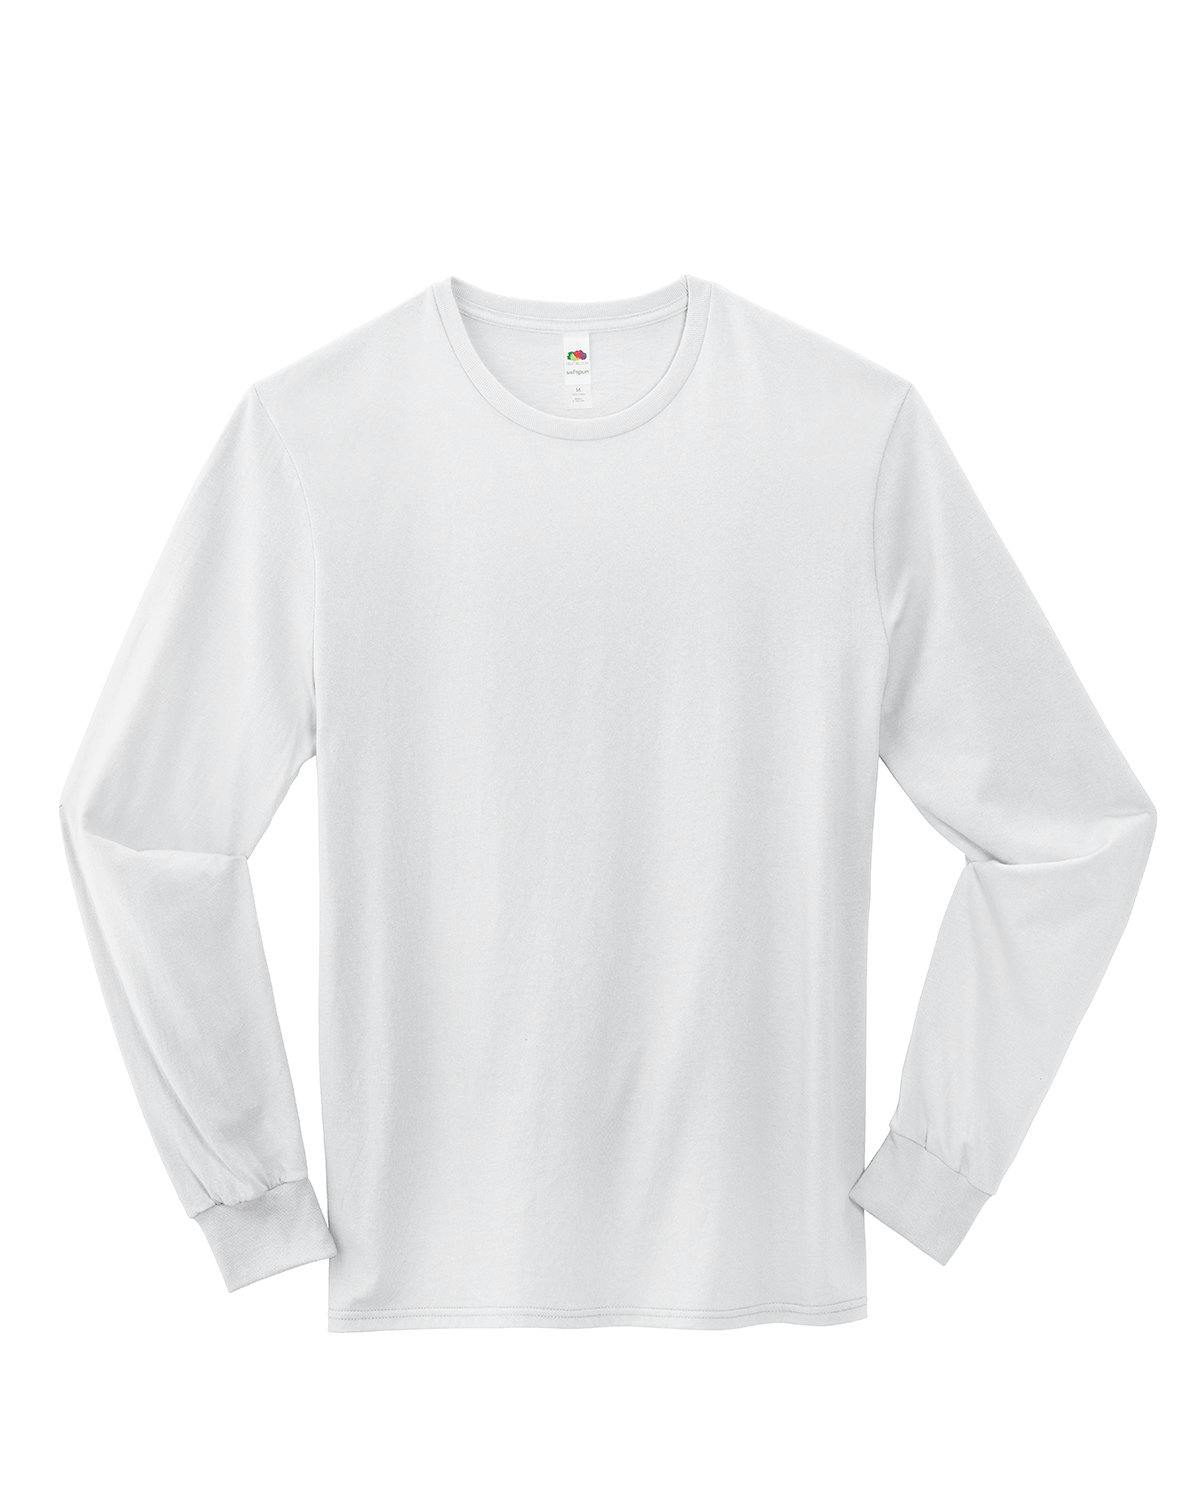 Image for Adult Sofspun® Jersey Long-Sleeve T-Shirt